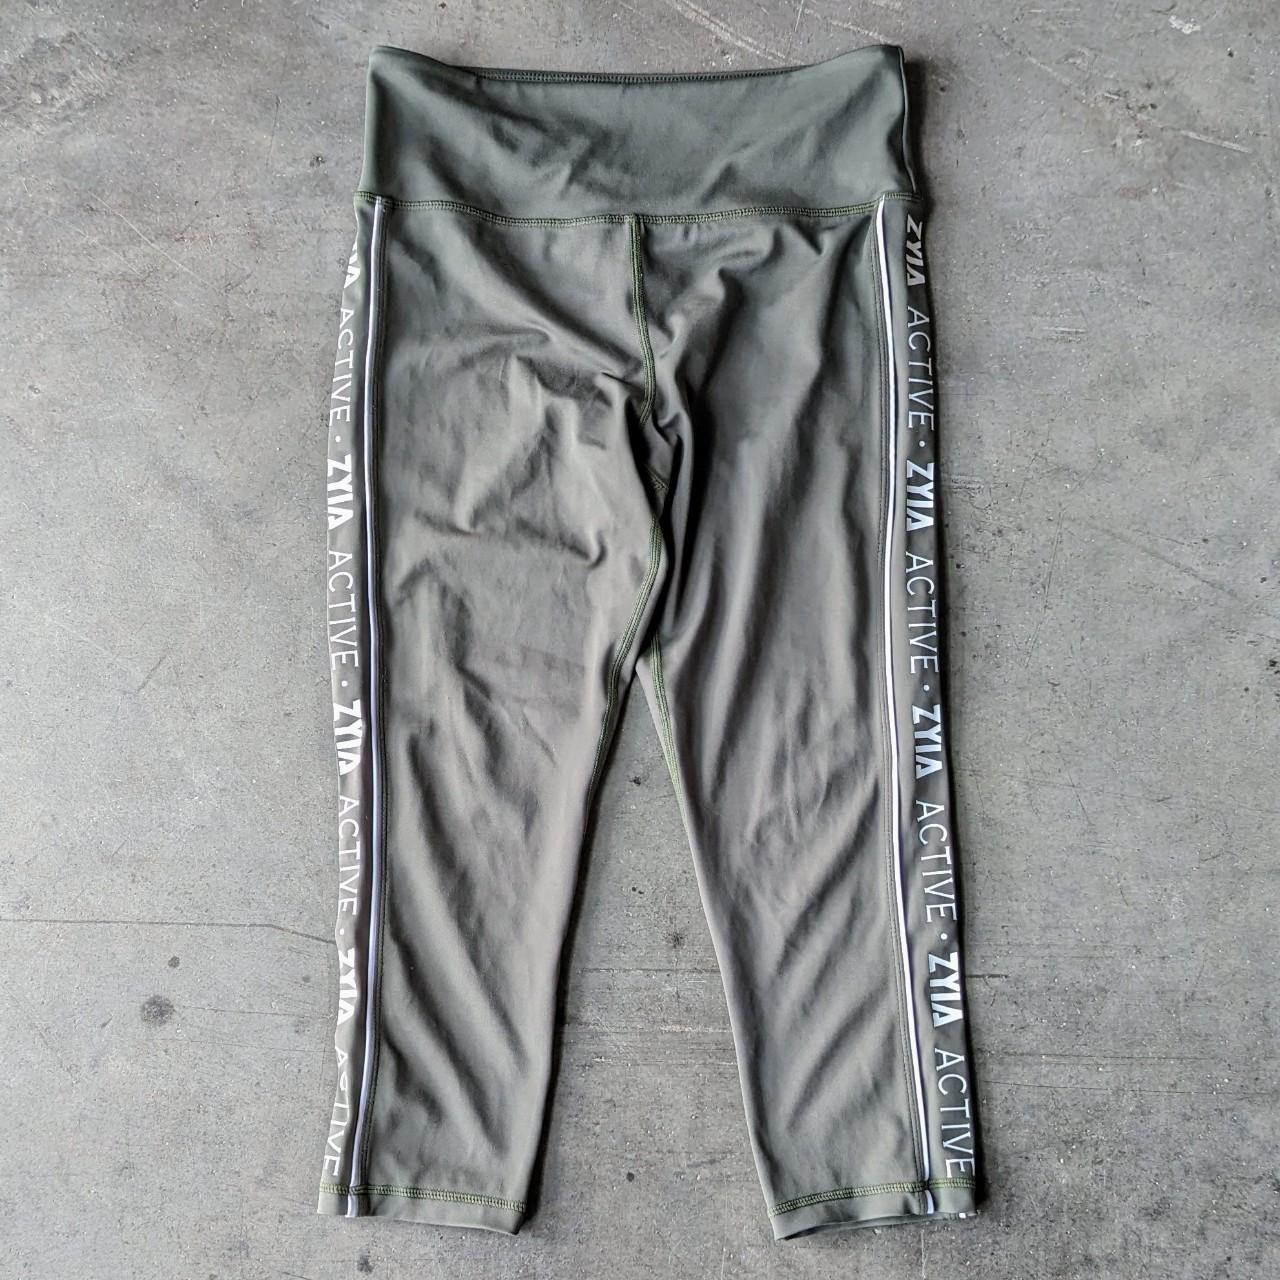 Zyia Active leggings, size 8/10 medium, in excellent - Depop